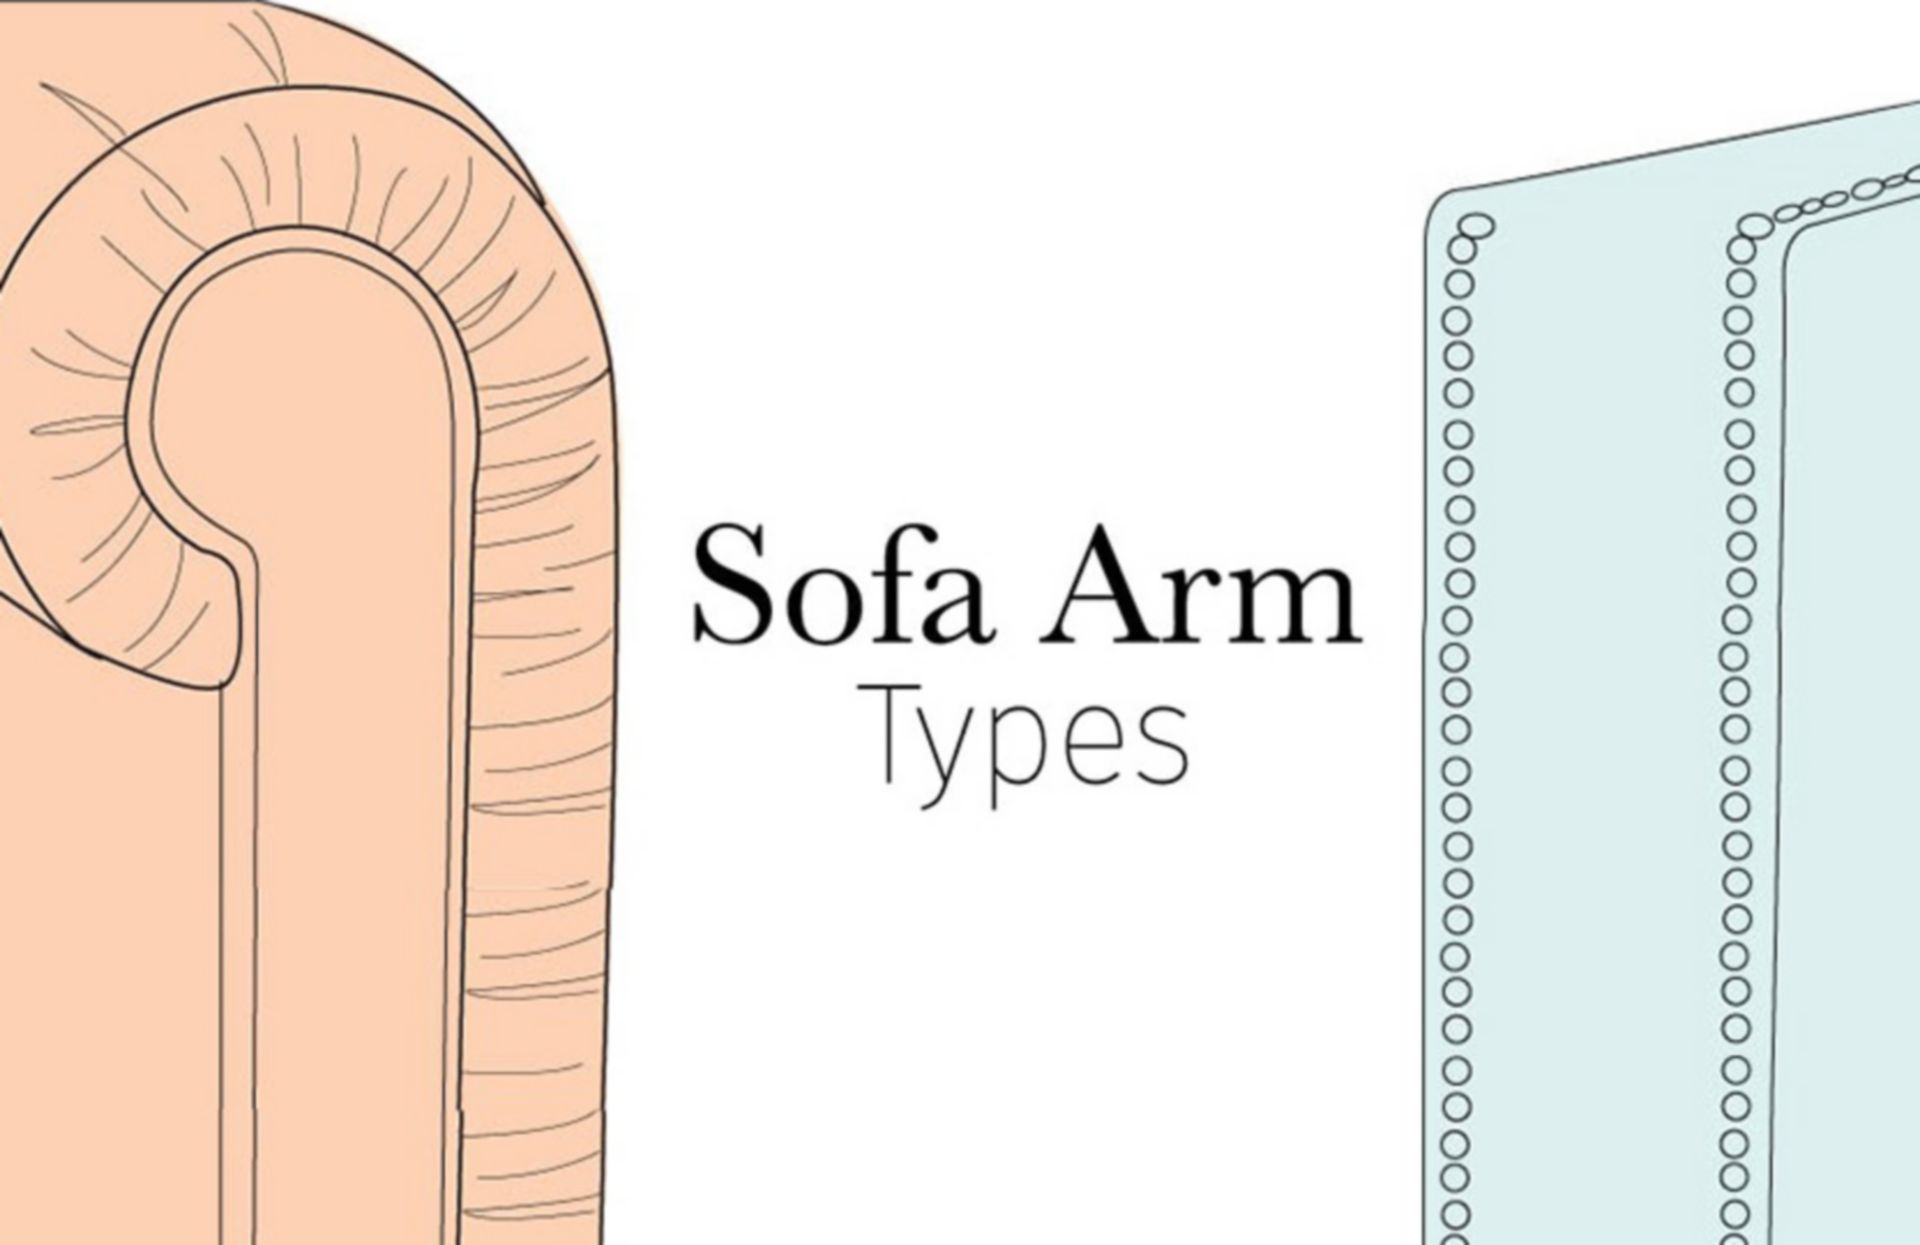 Sofa Arm Types